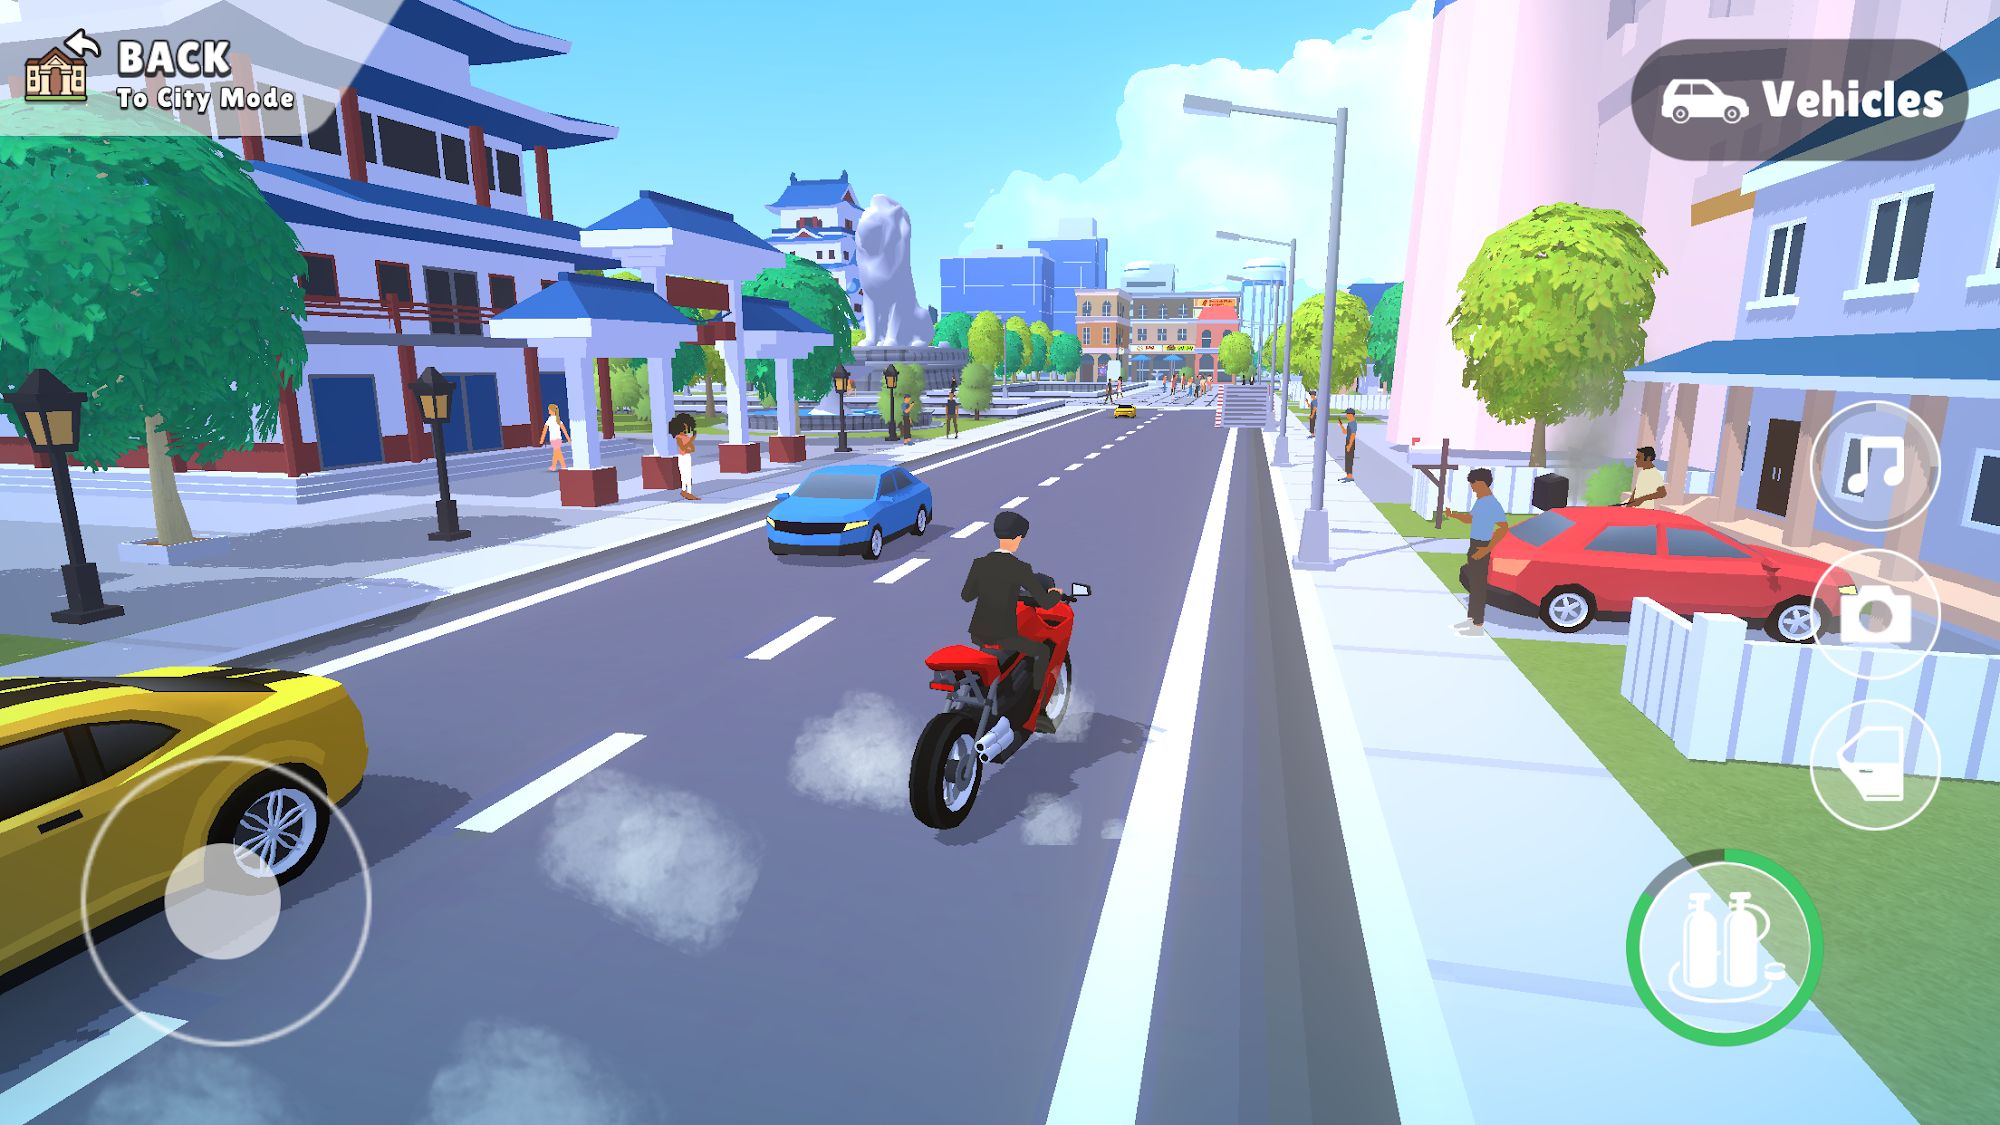 Pocket City 2 - Android game screenshots.